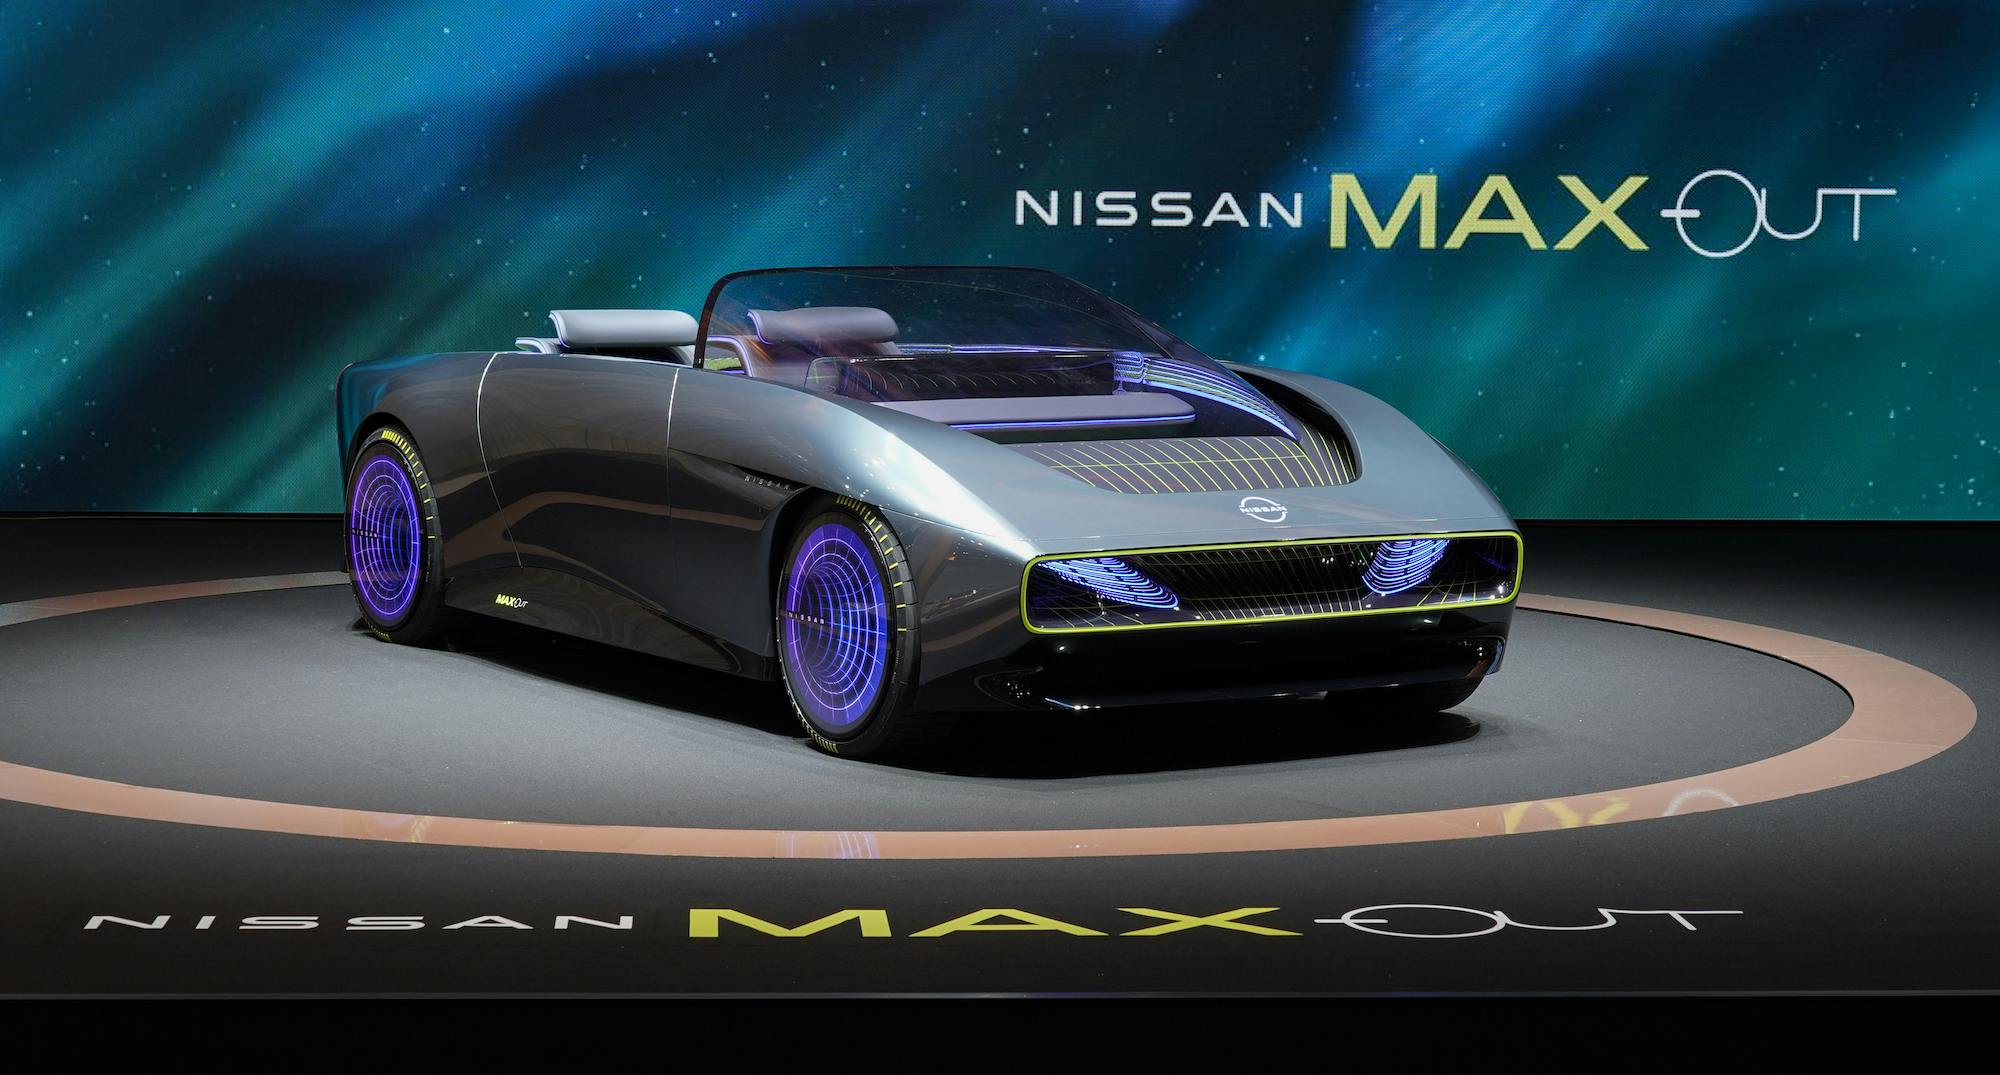 Nissan Max-Out Futuristic Concept Car front three quarter